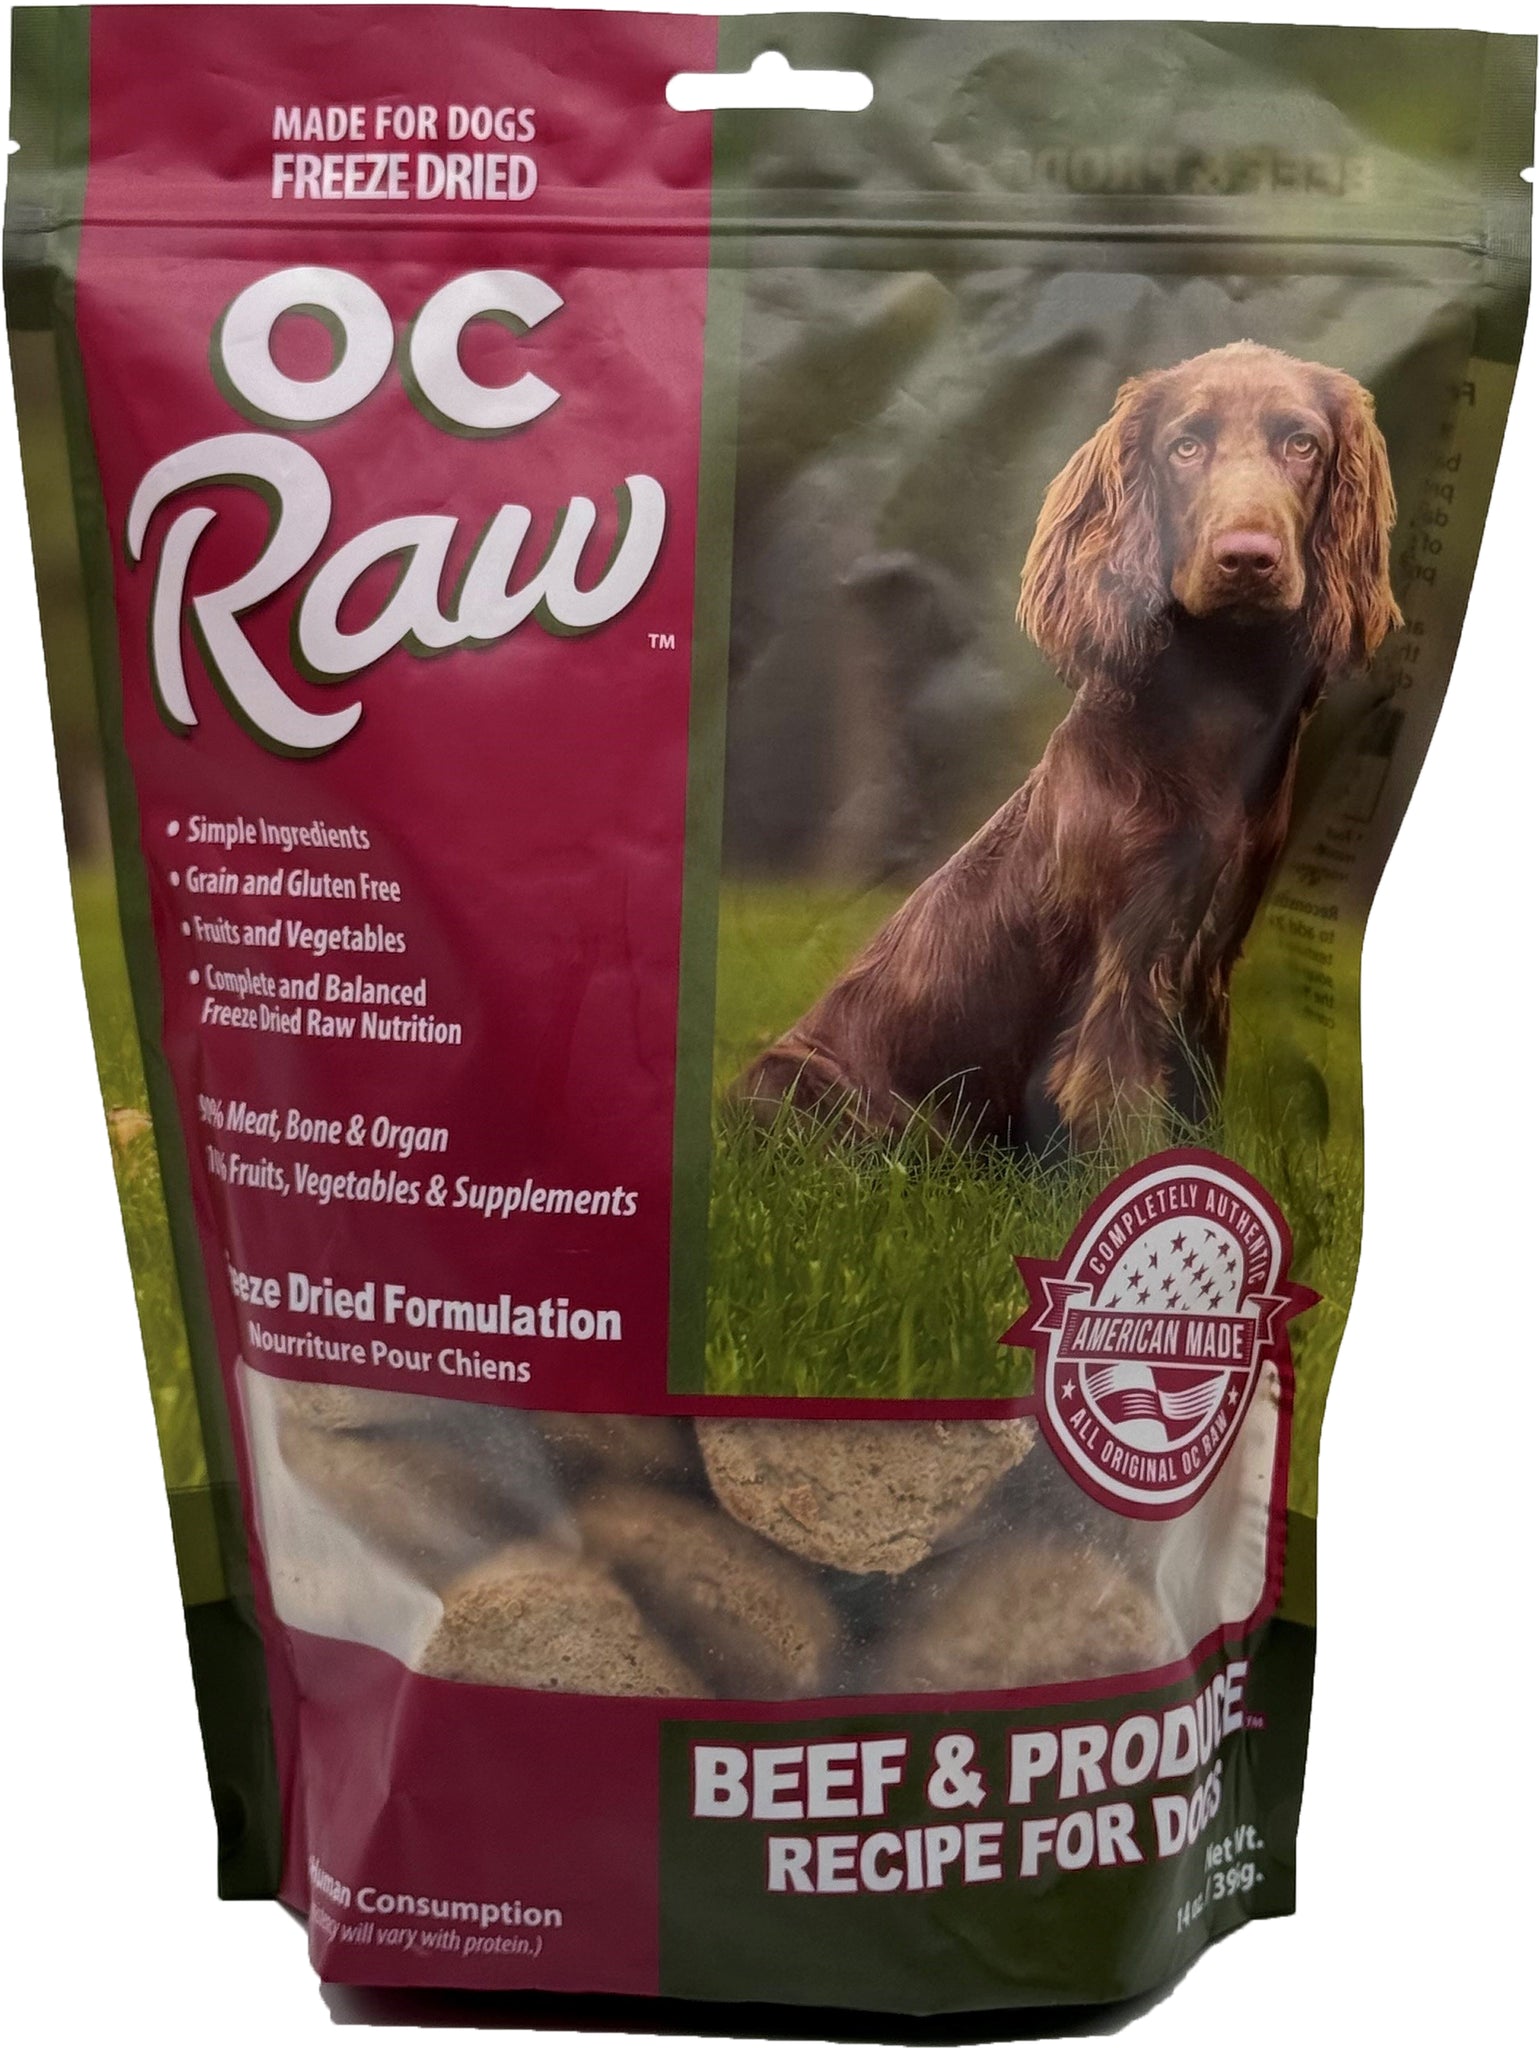 OC Raw Freeze Dried Raw Beef & Produce Sliders